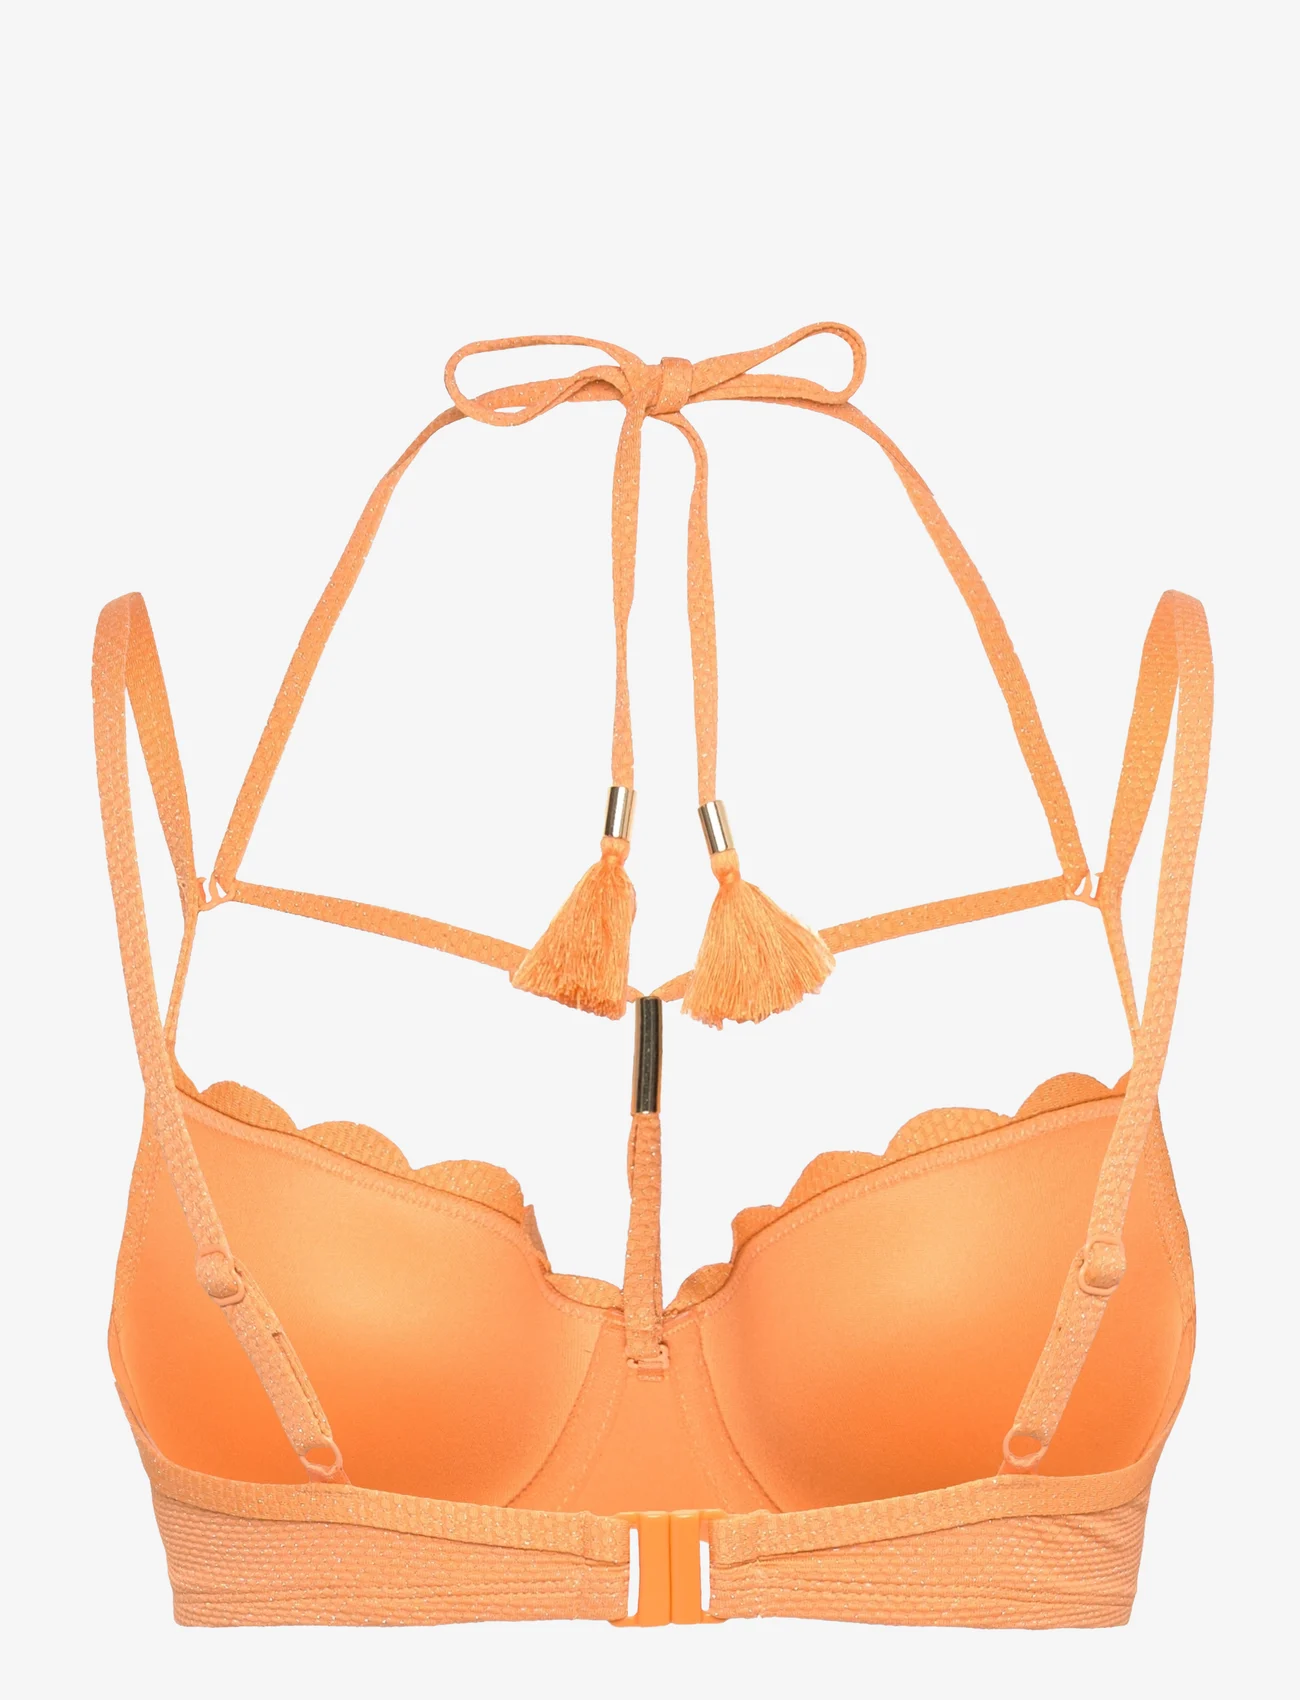 Hunkemöller - Scallop lurex pd - bikini-oberteile mit bügel - orange - 1